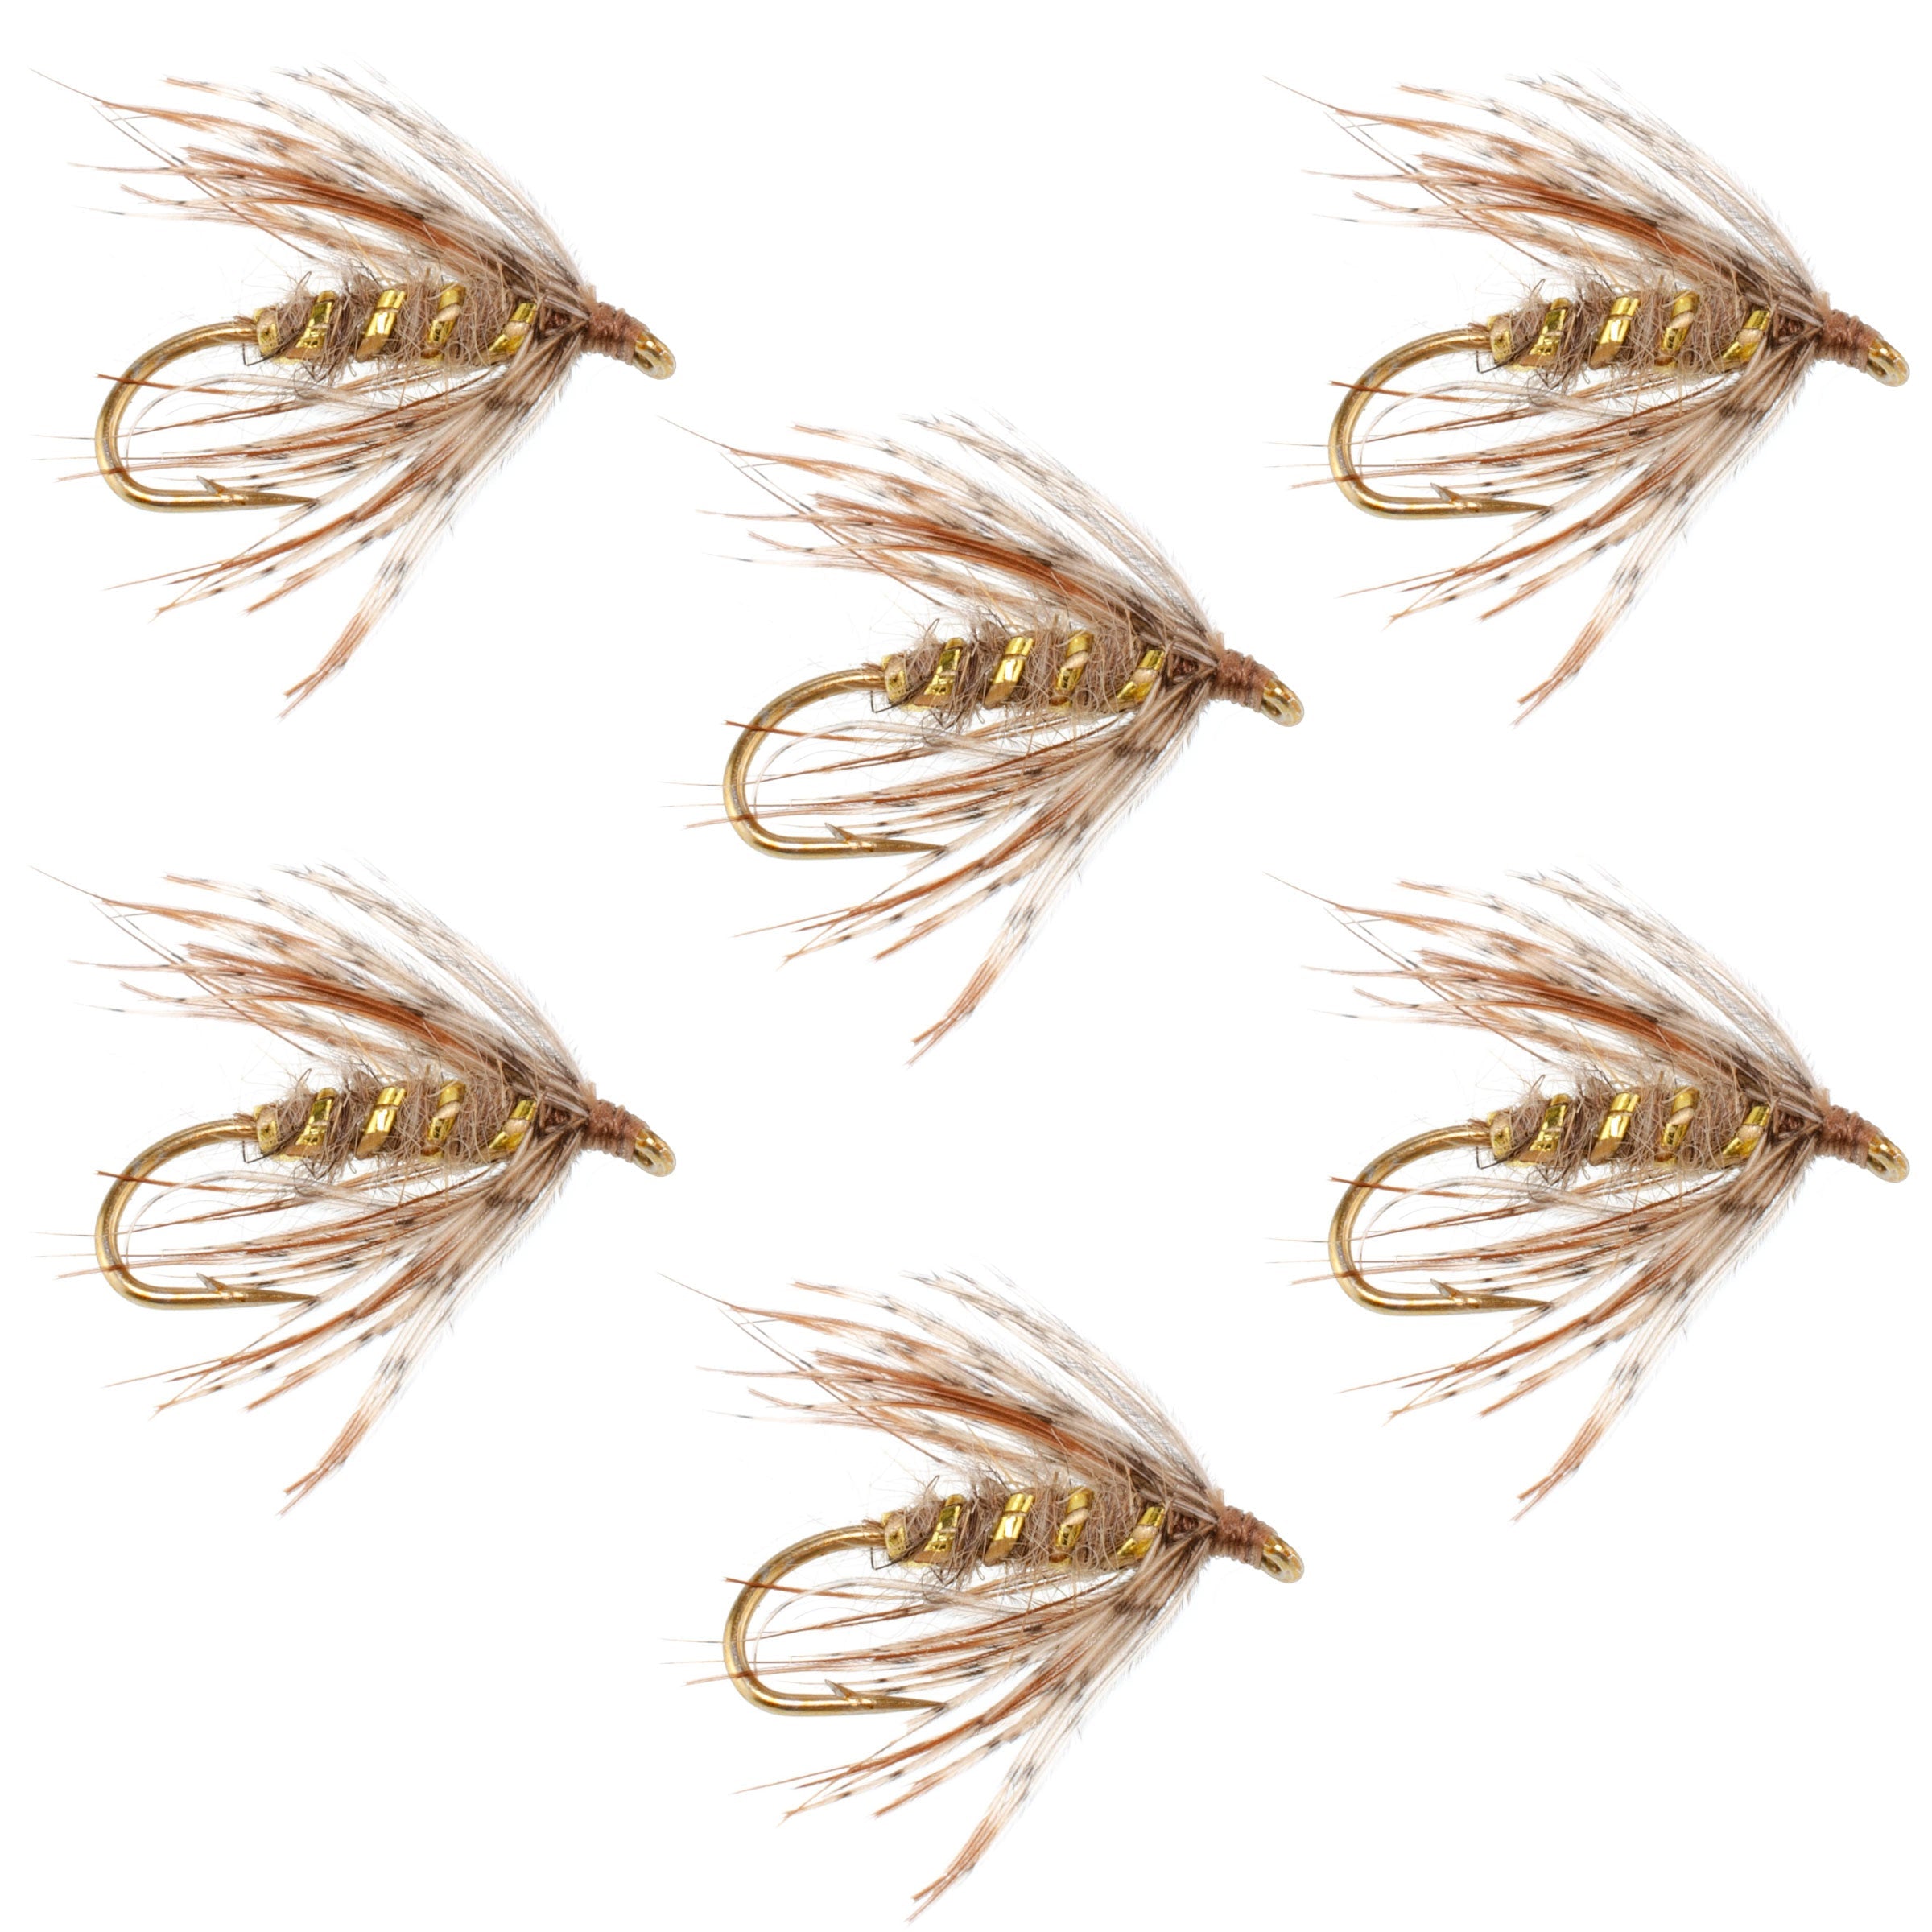 Soft Hackle March Brown Partridge Fly Fishing Wet Flies - 6 Flies Hook Size 12